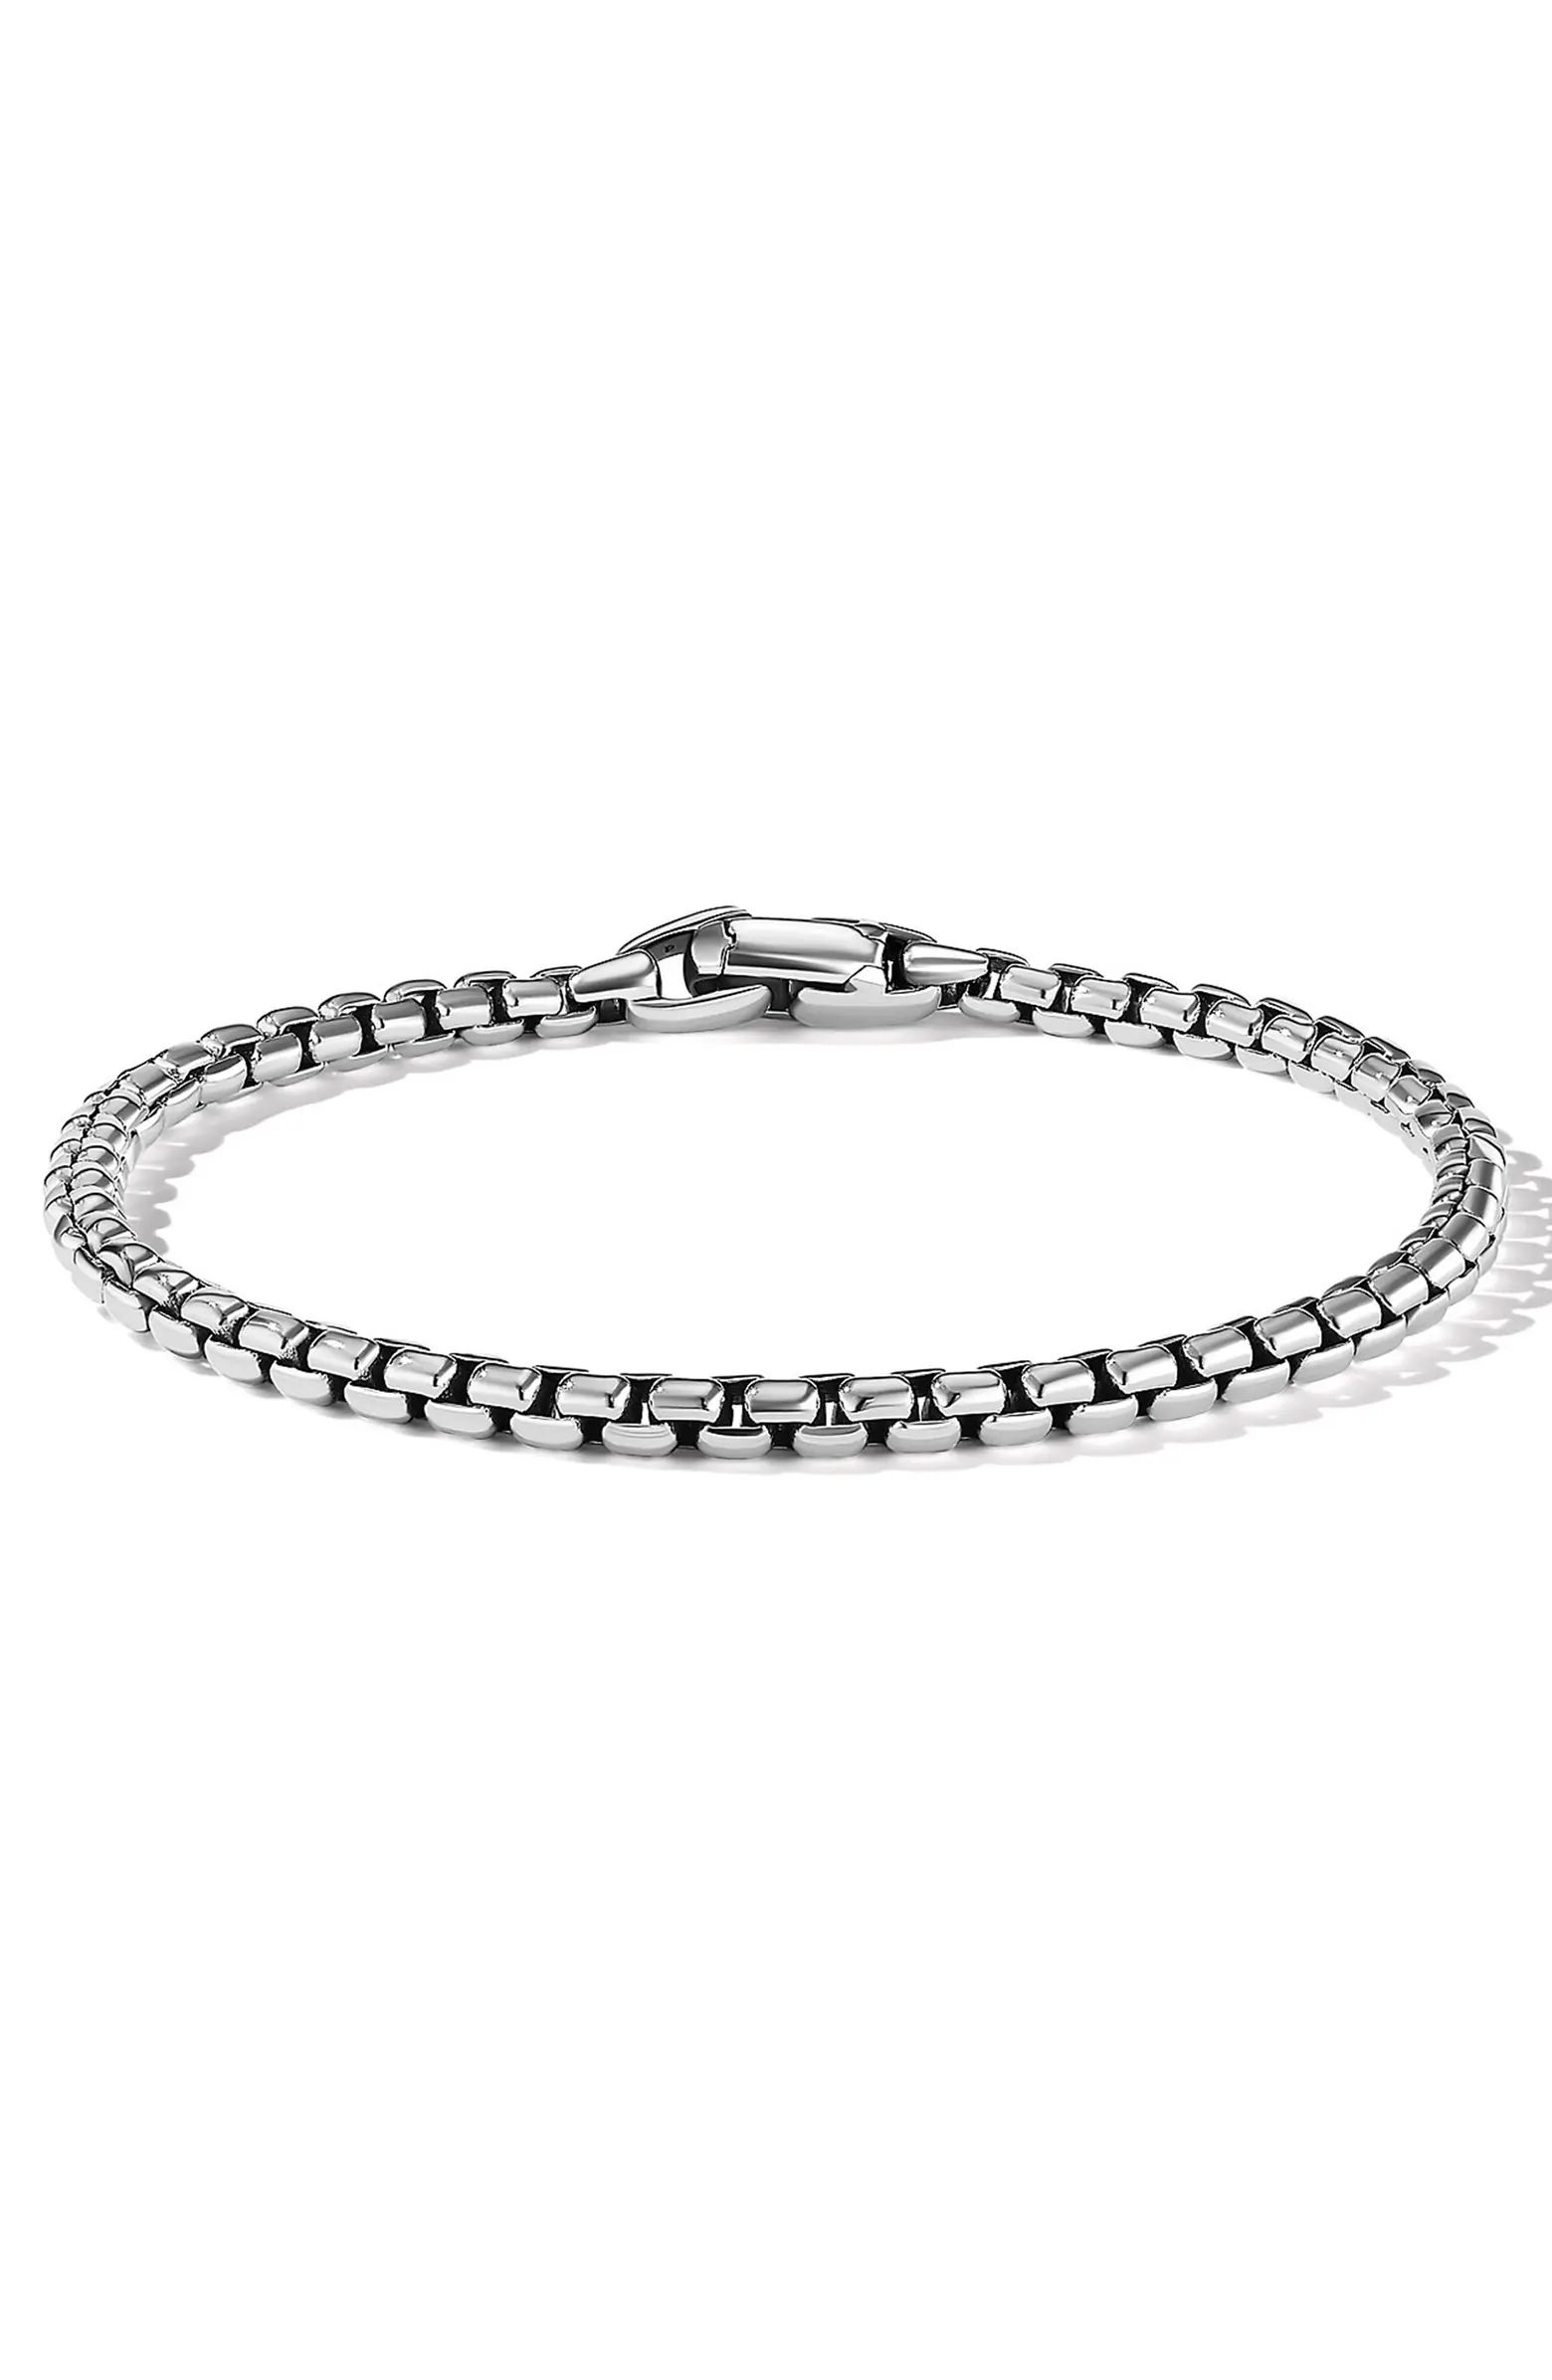 Men's Box Chain Bracelet in Sterling Silver, 4mm | Nordstrom